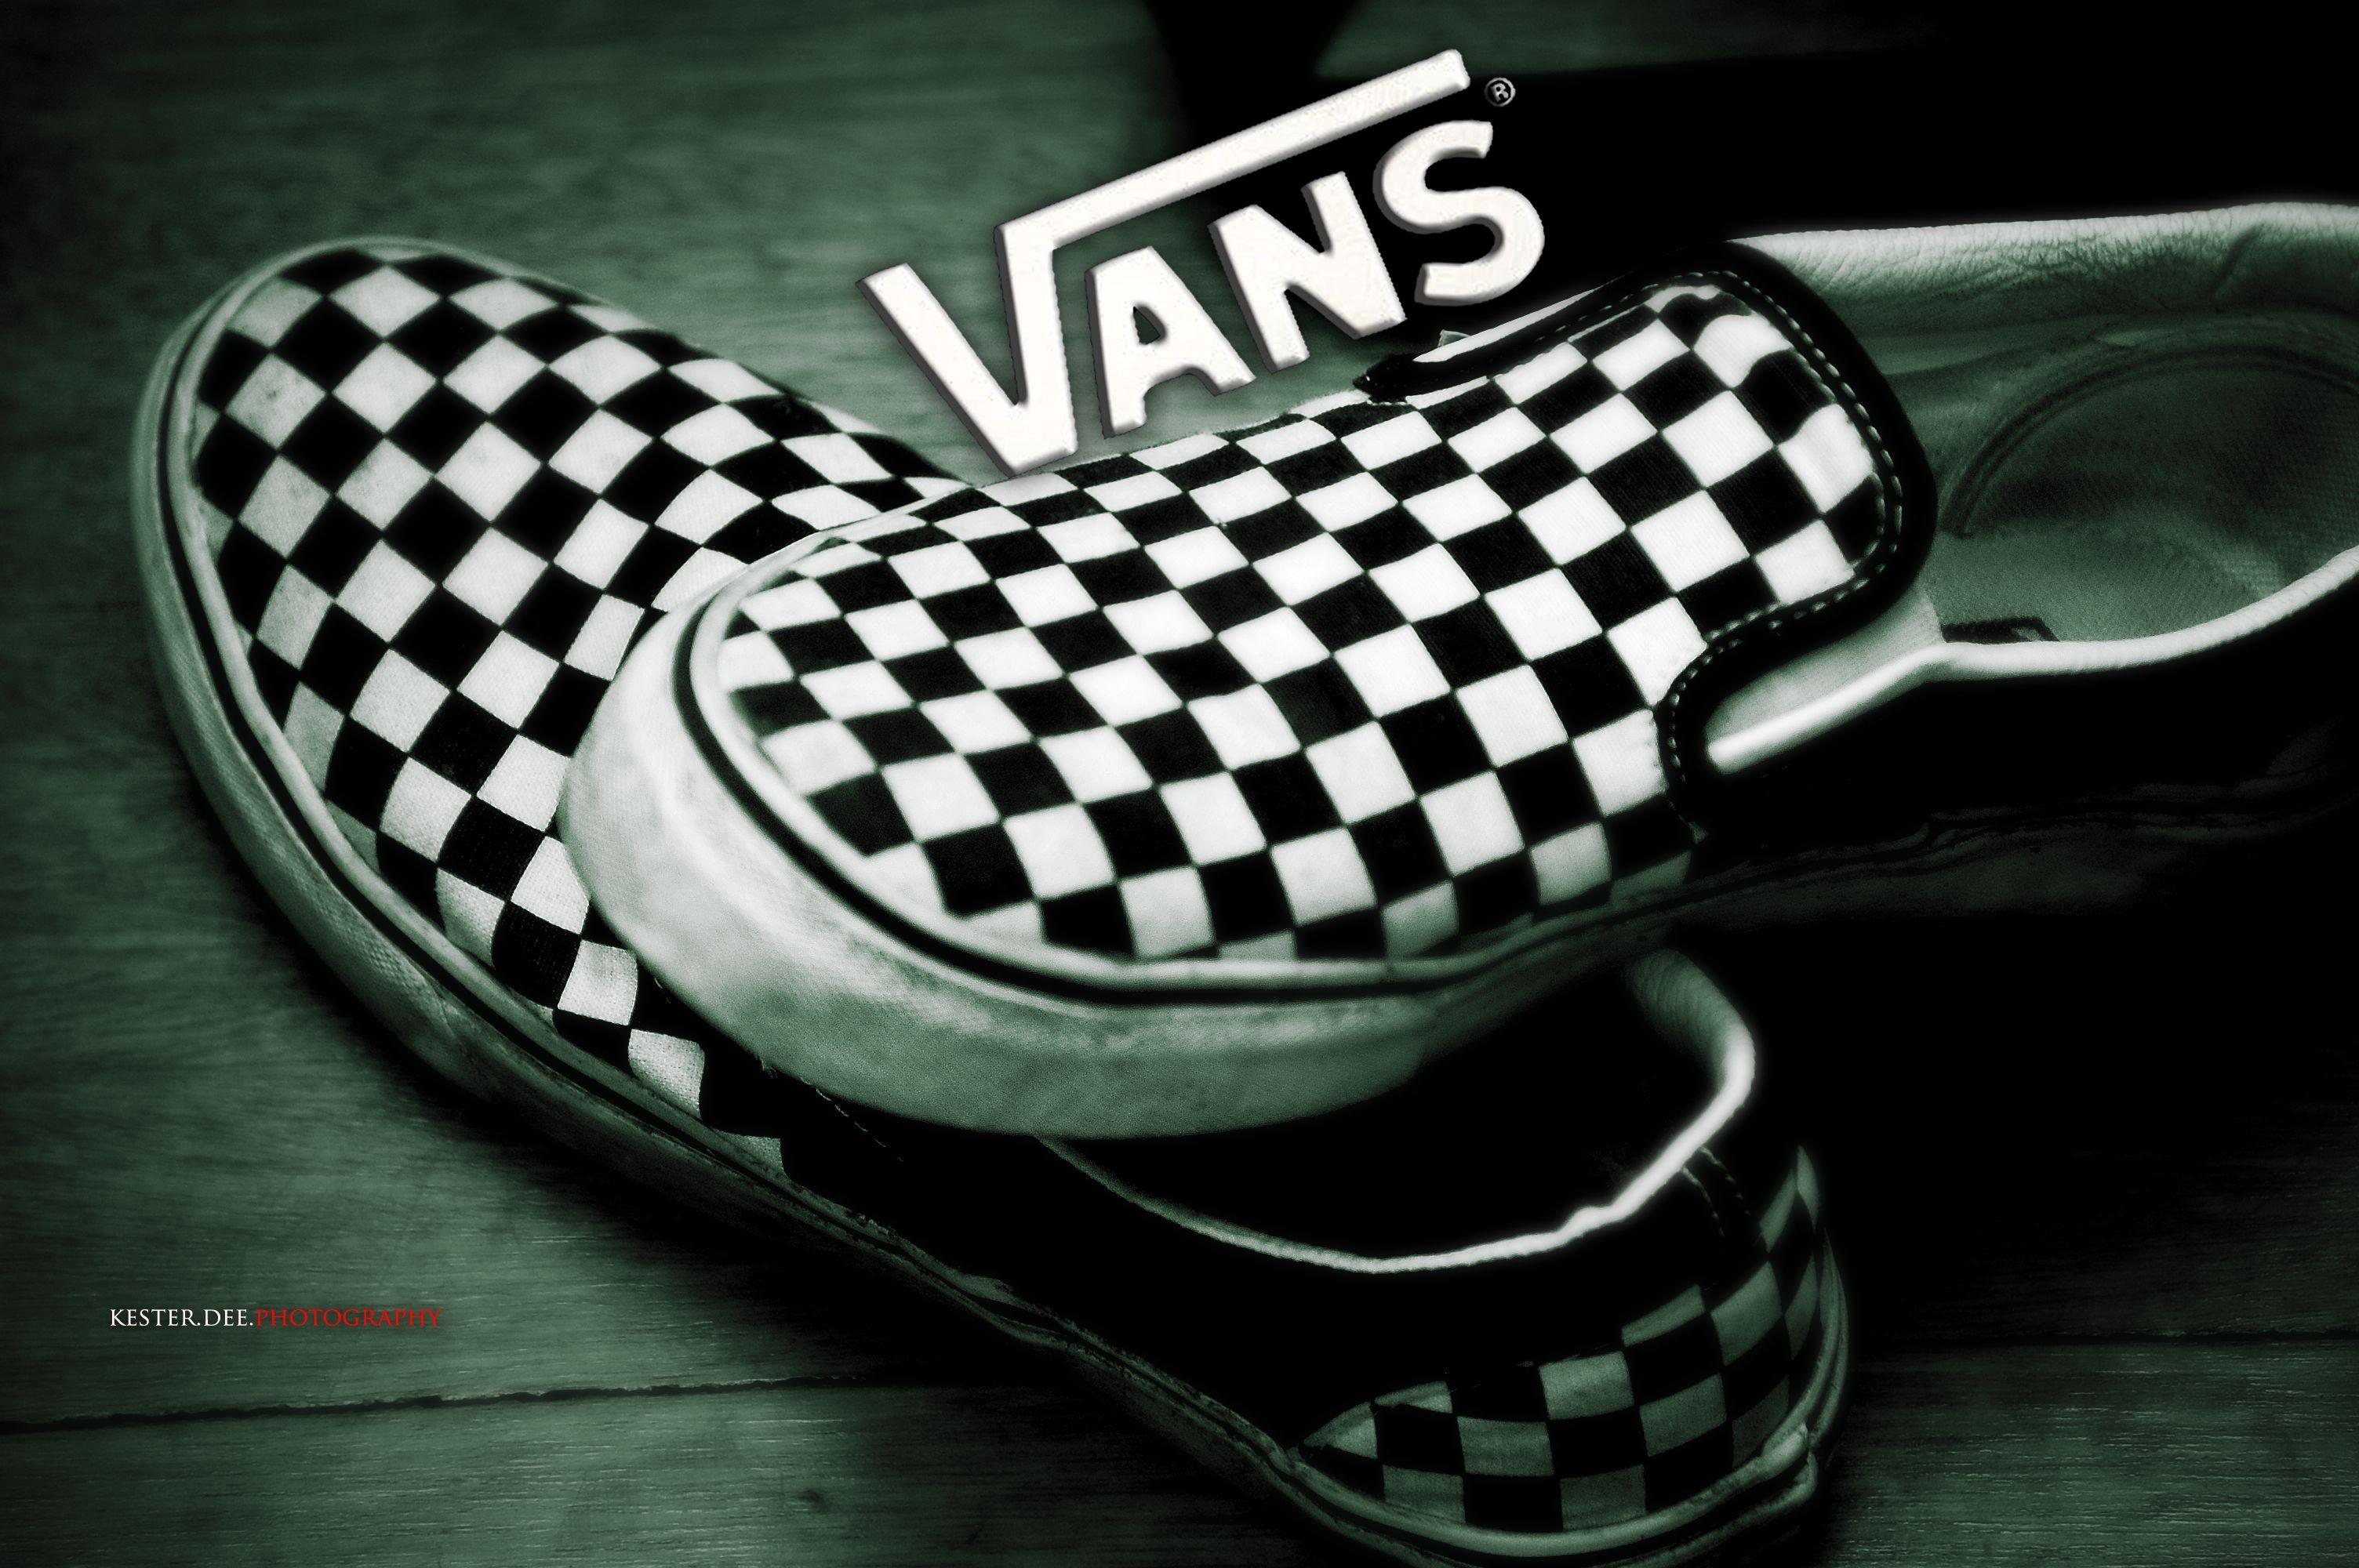 vans shoes wallpaper hd iphone